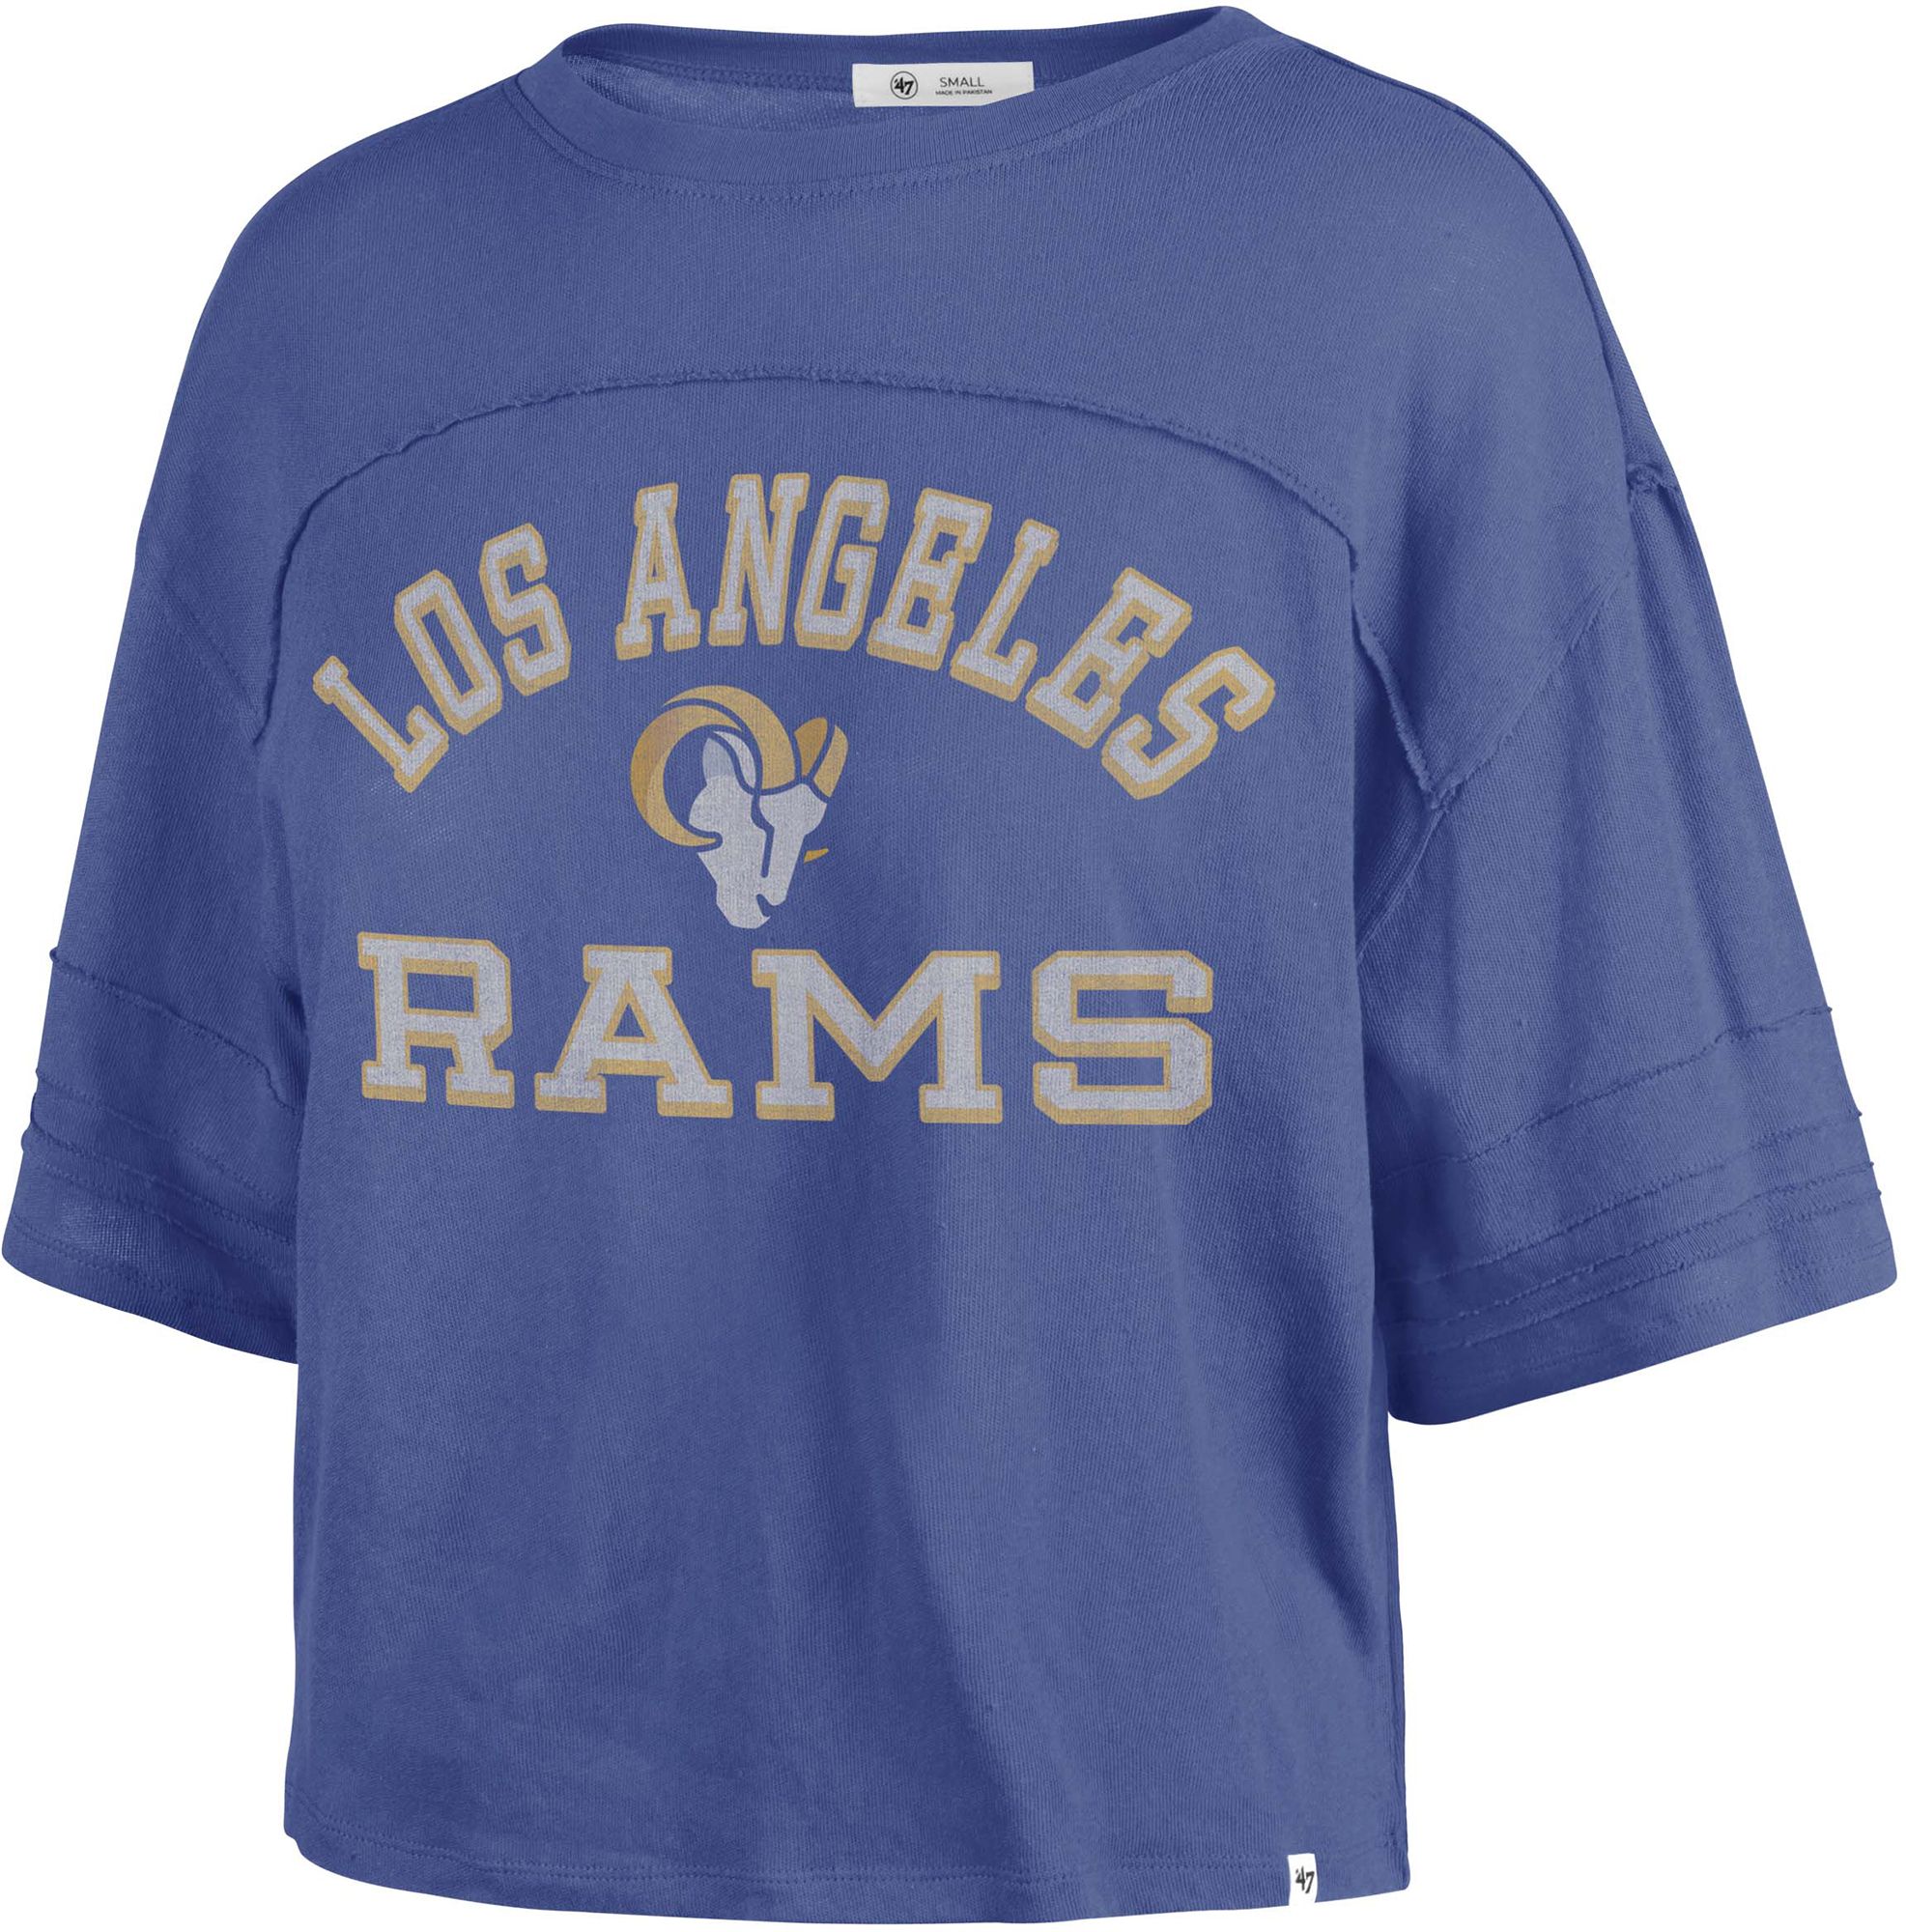 Los Angeles Rams Jerseys, Apparel & Gear.